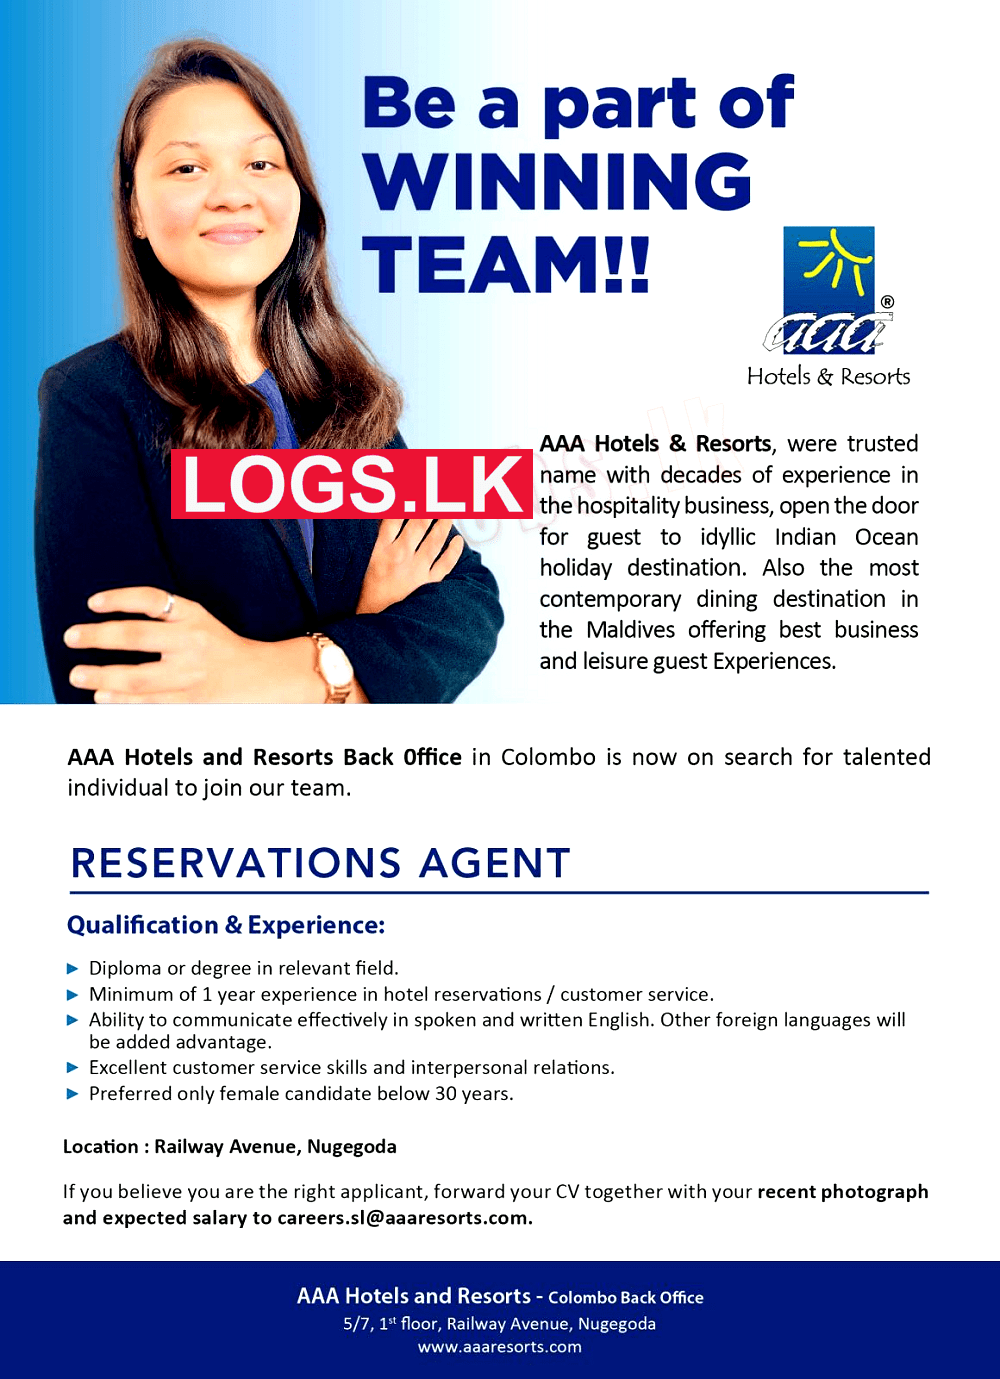 Reservations Agent Job Vacancy at AAA Hotels & Resorts Job Vacancies in Sri Lanka